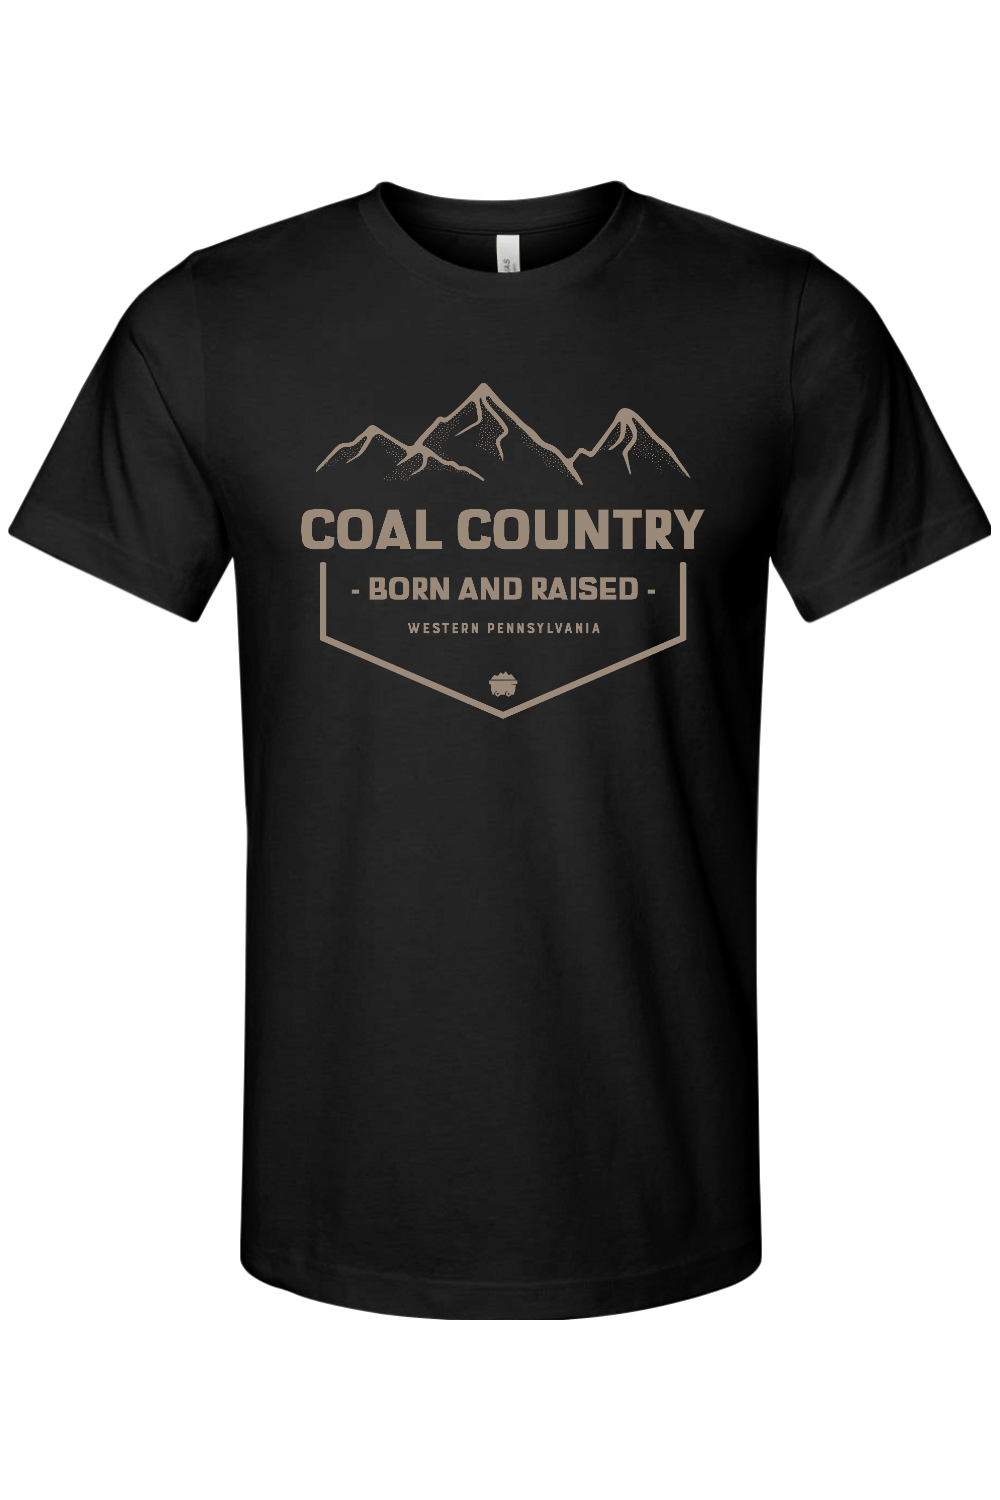 Coal Country - Bella + Canvas Jersey Tee - Yinzylvania